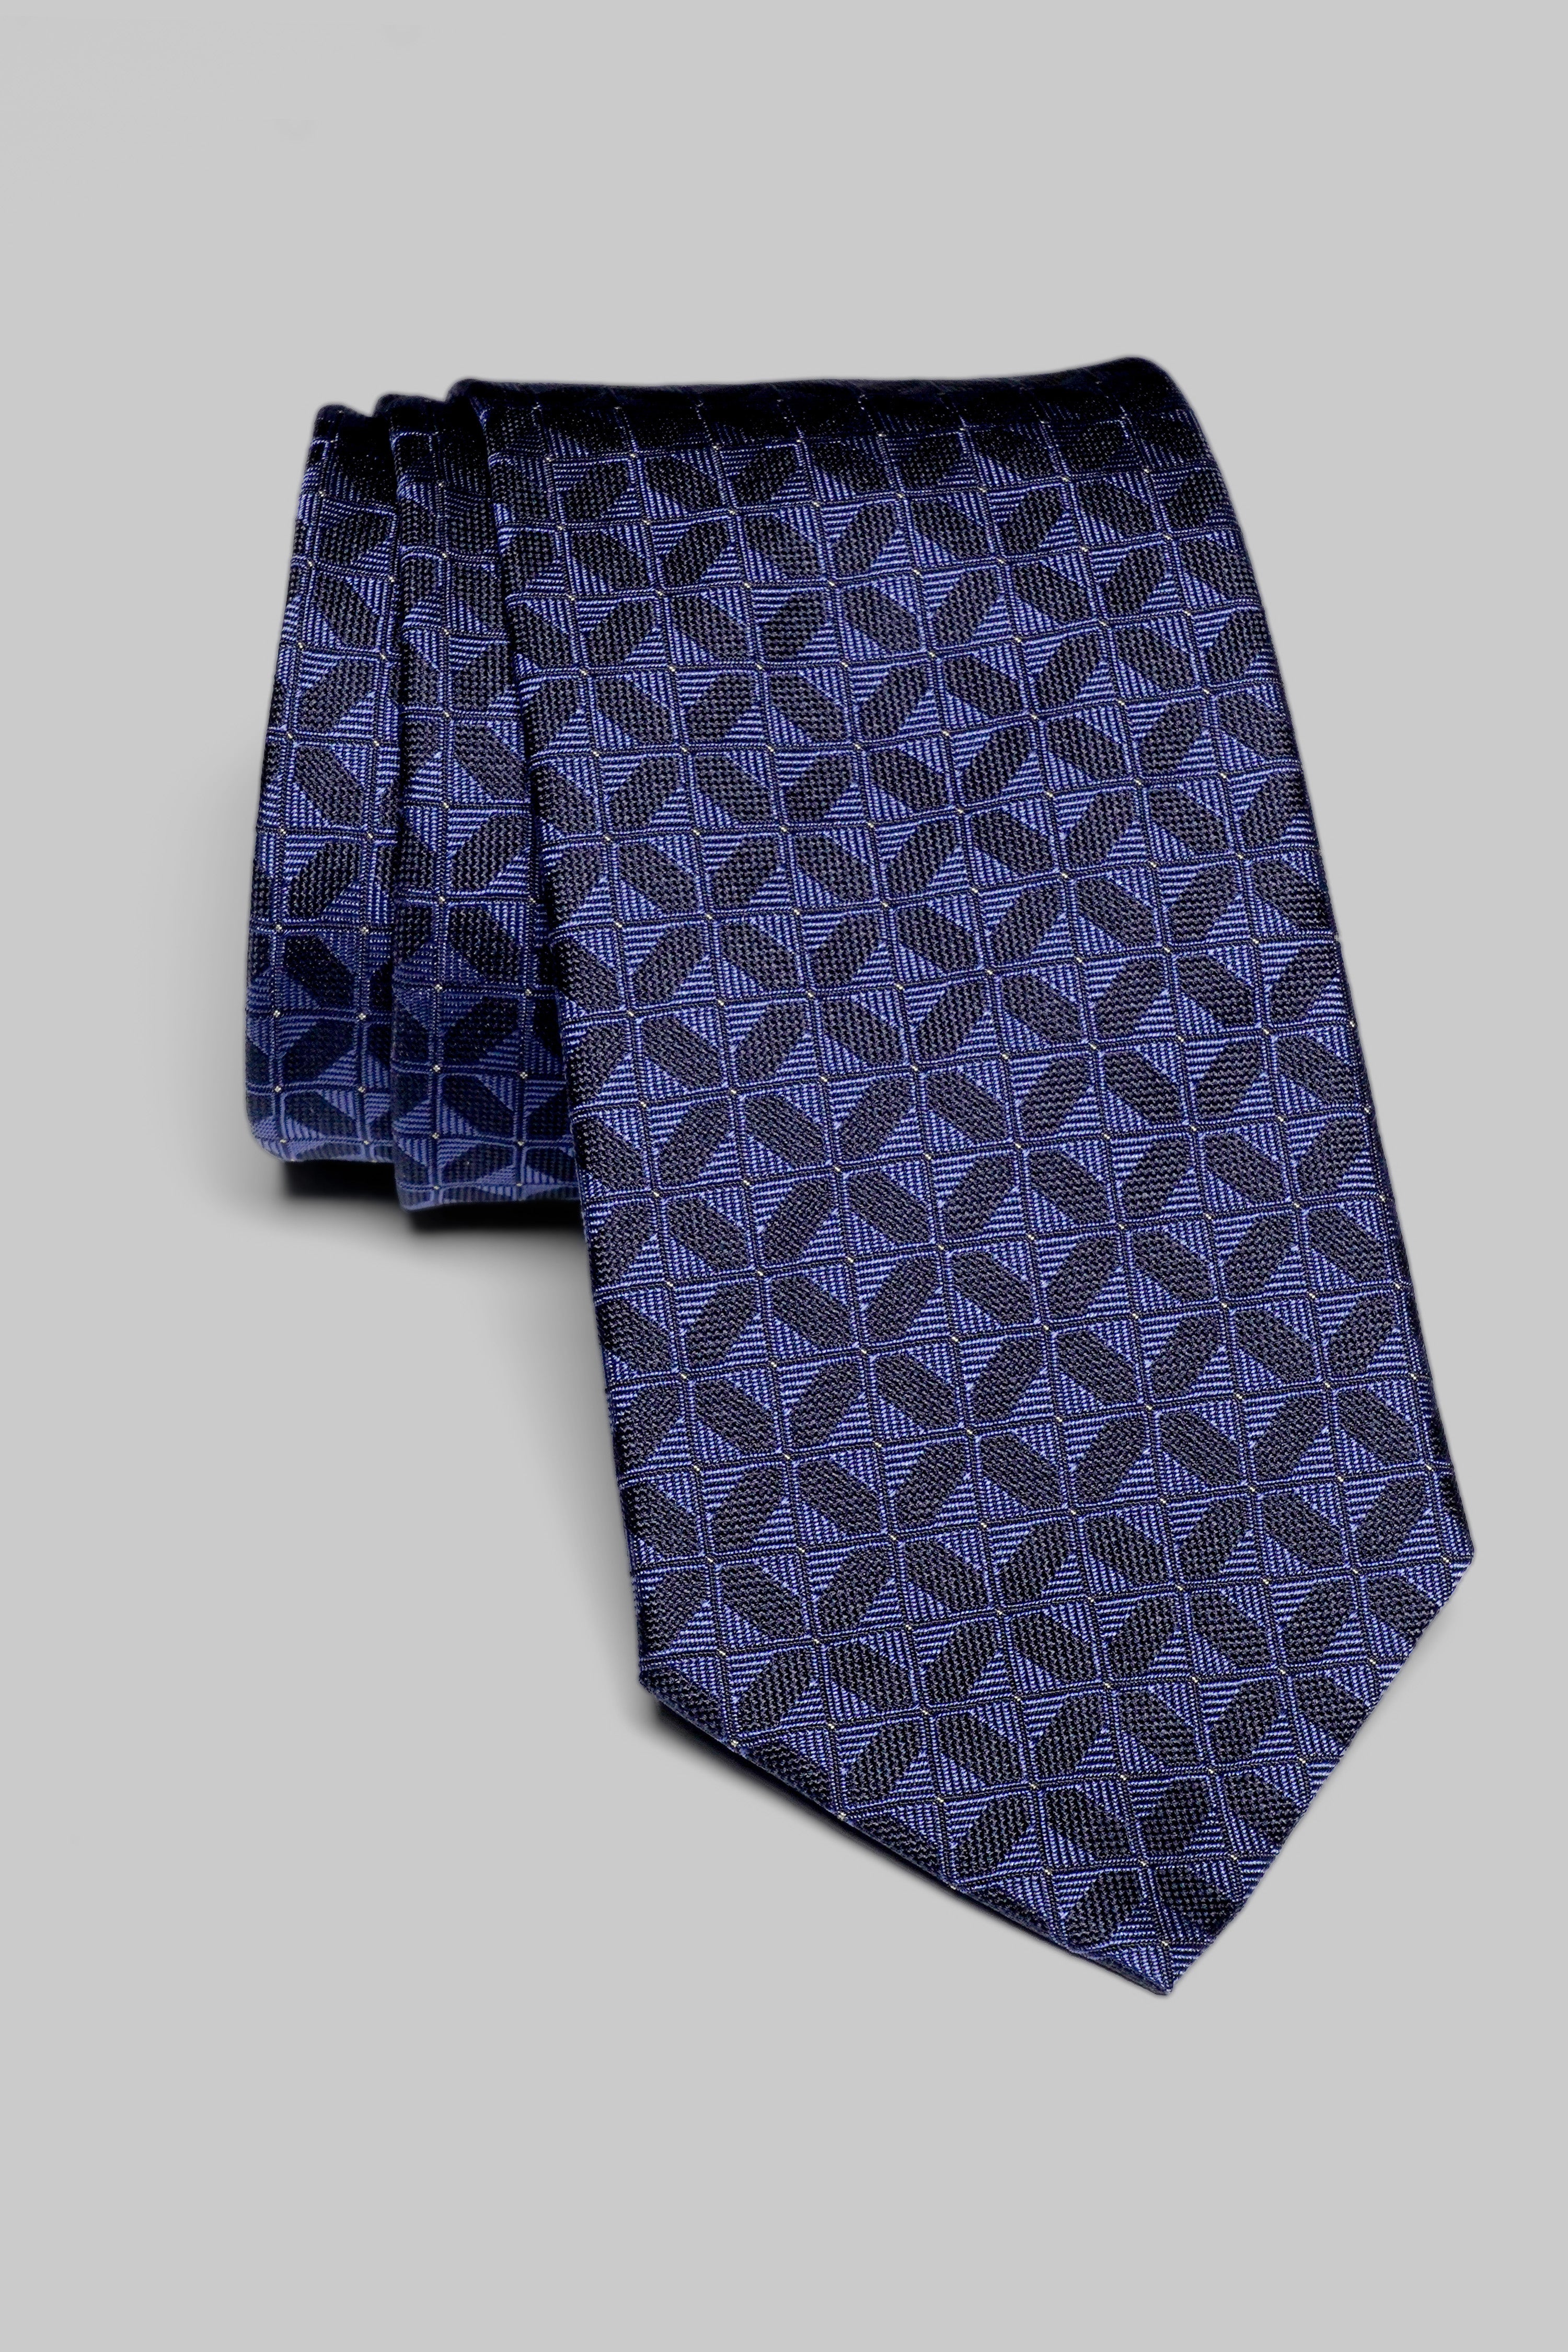 Vue alternative Gordon cravate tissée en bleu marine